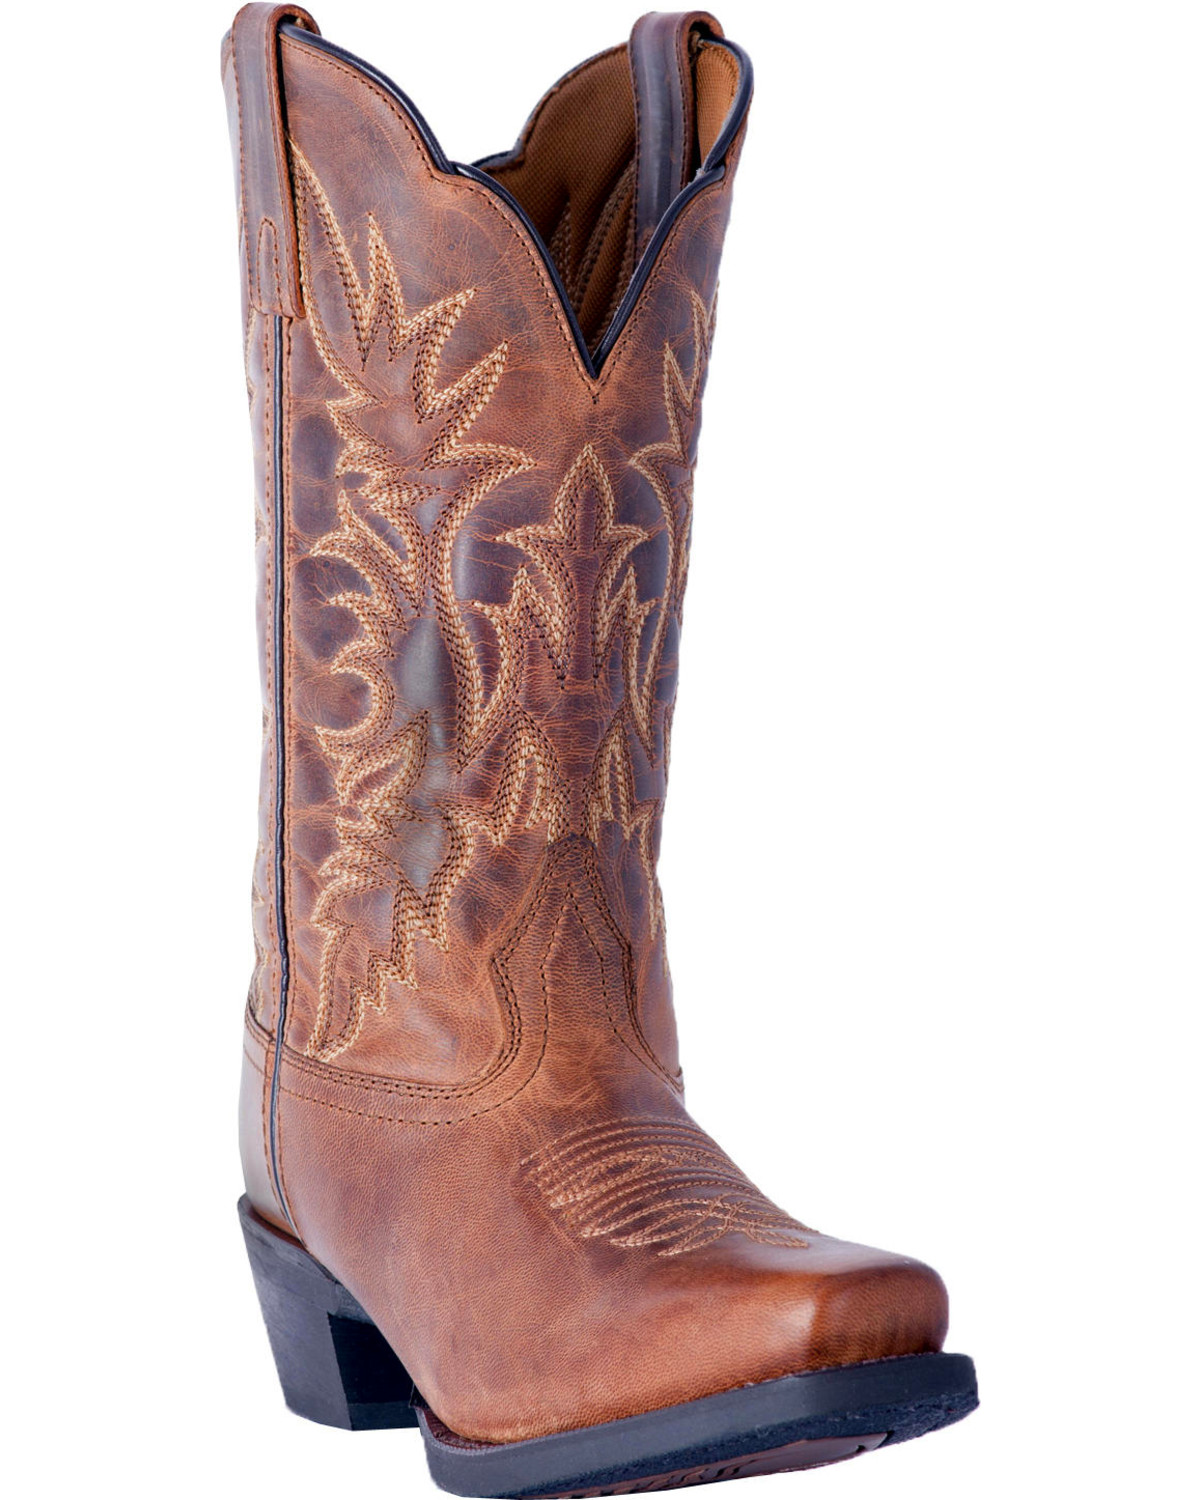 Laredo Women's Tan Malinda Cowgirl Boots - Square Toe